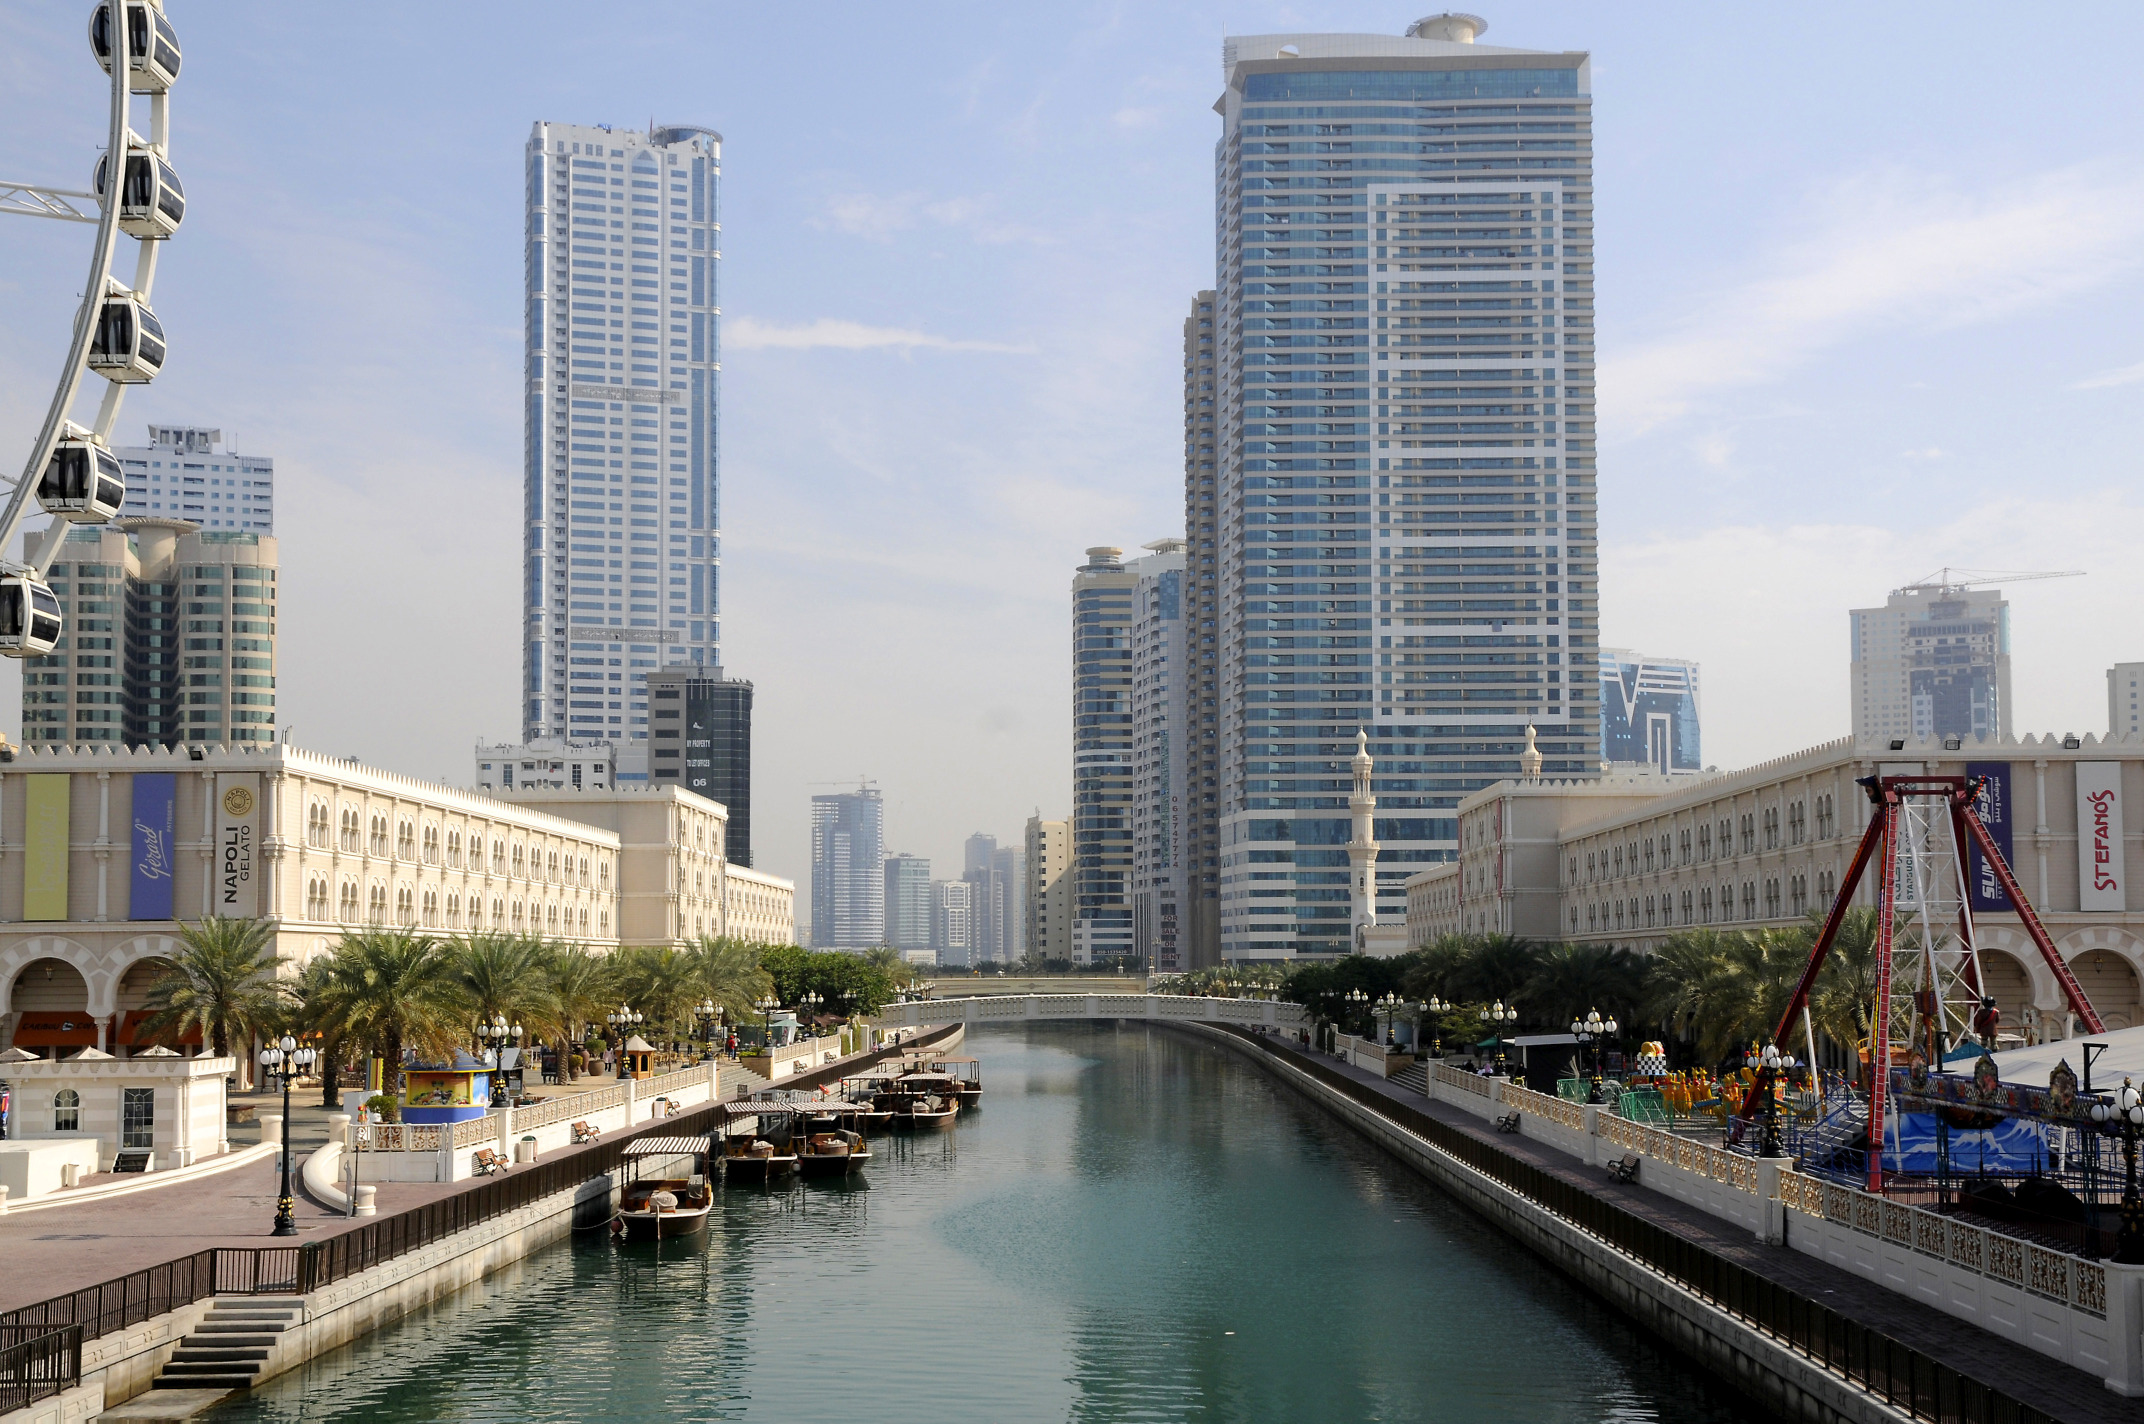 Qasba Kanal (1) | Sharjah | Pictures | United Arab Emirates in Global ...